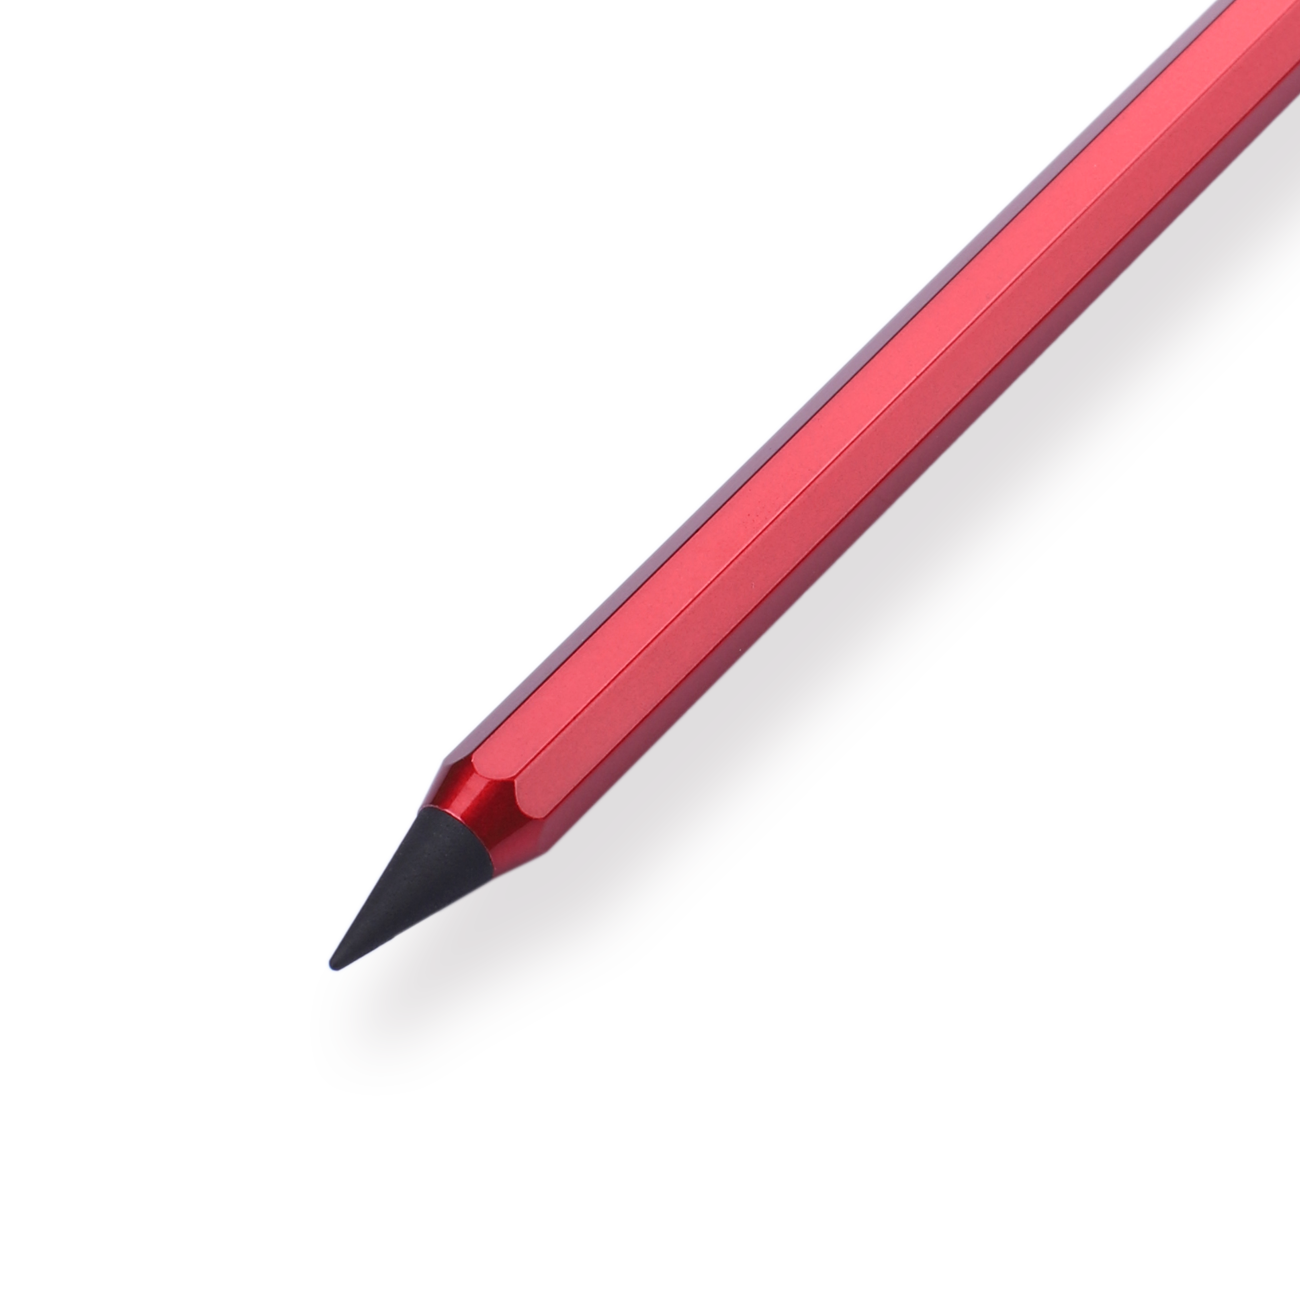 Sun-Star Metacil Metal Pencil - Metallic Red - Stationery Pal